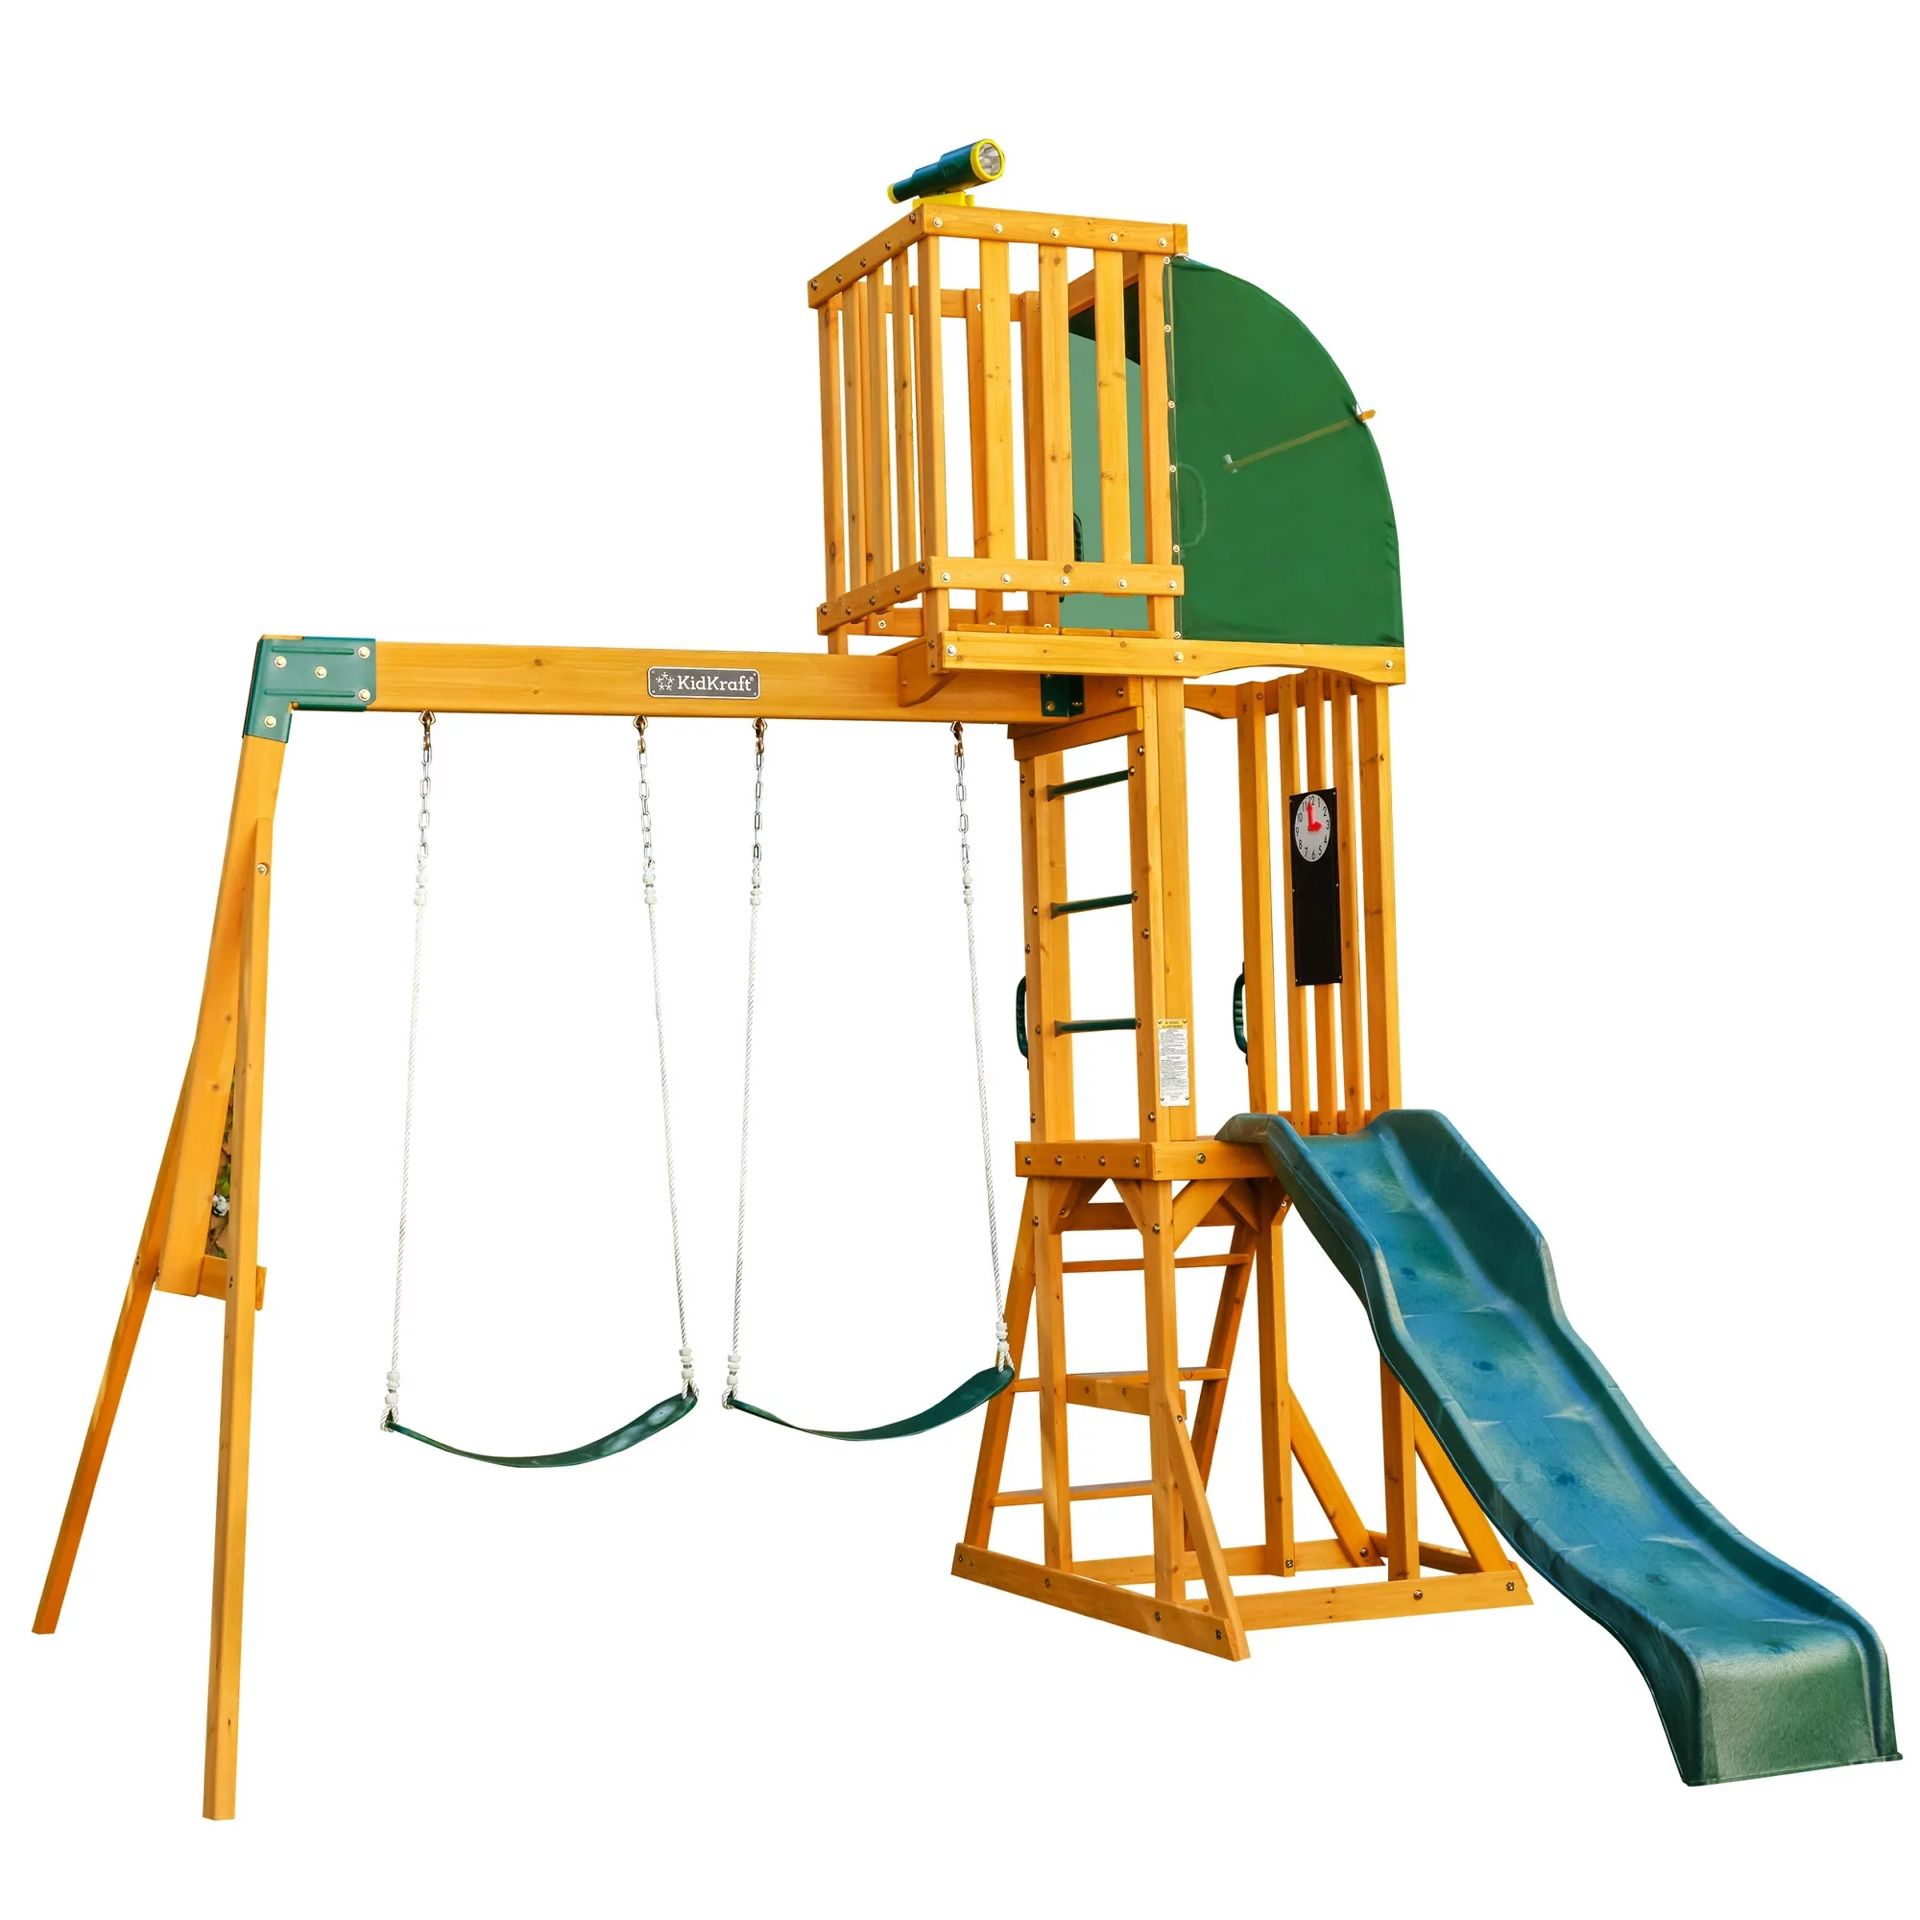 New in box KidKraft Hawk Tower Wooden Swing Set with Slide and 2 Belt Swings, 9.9 feet Tall